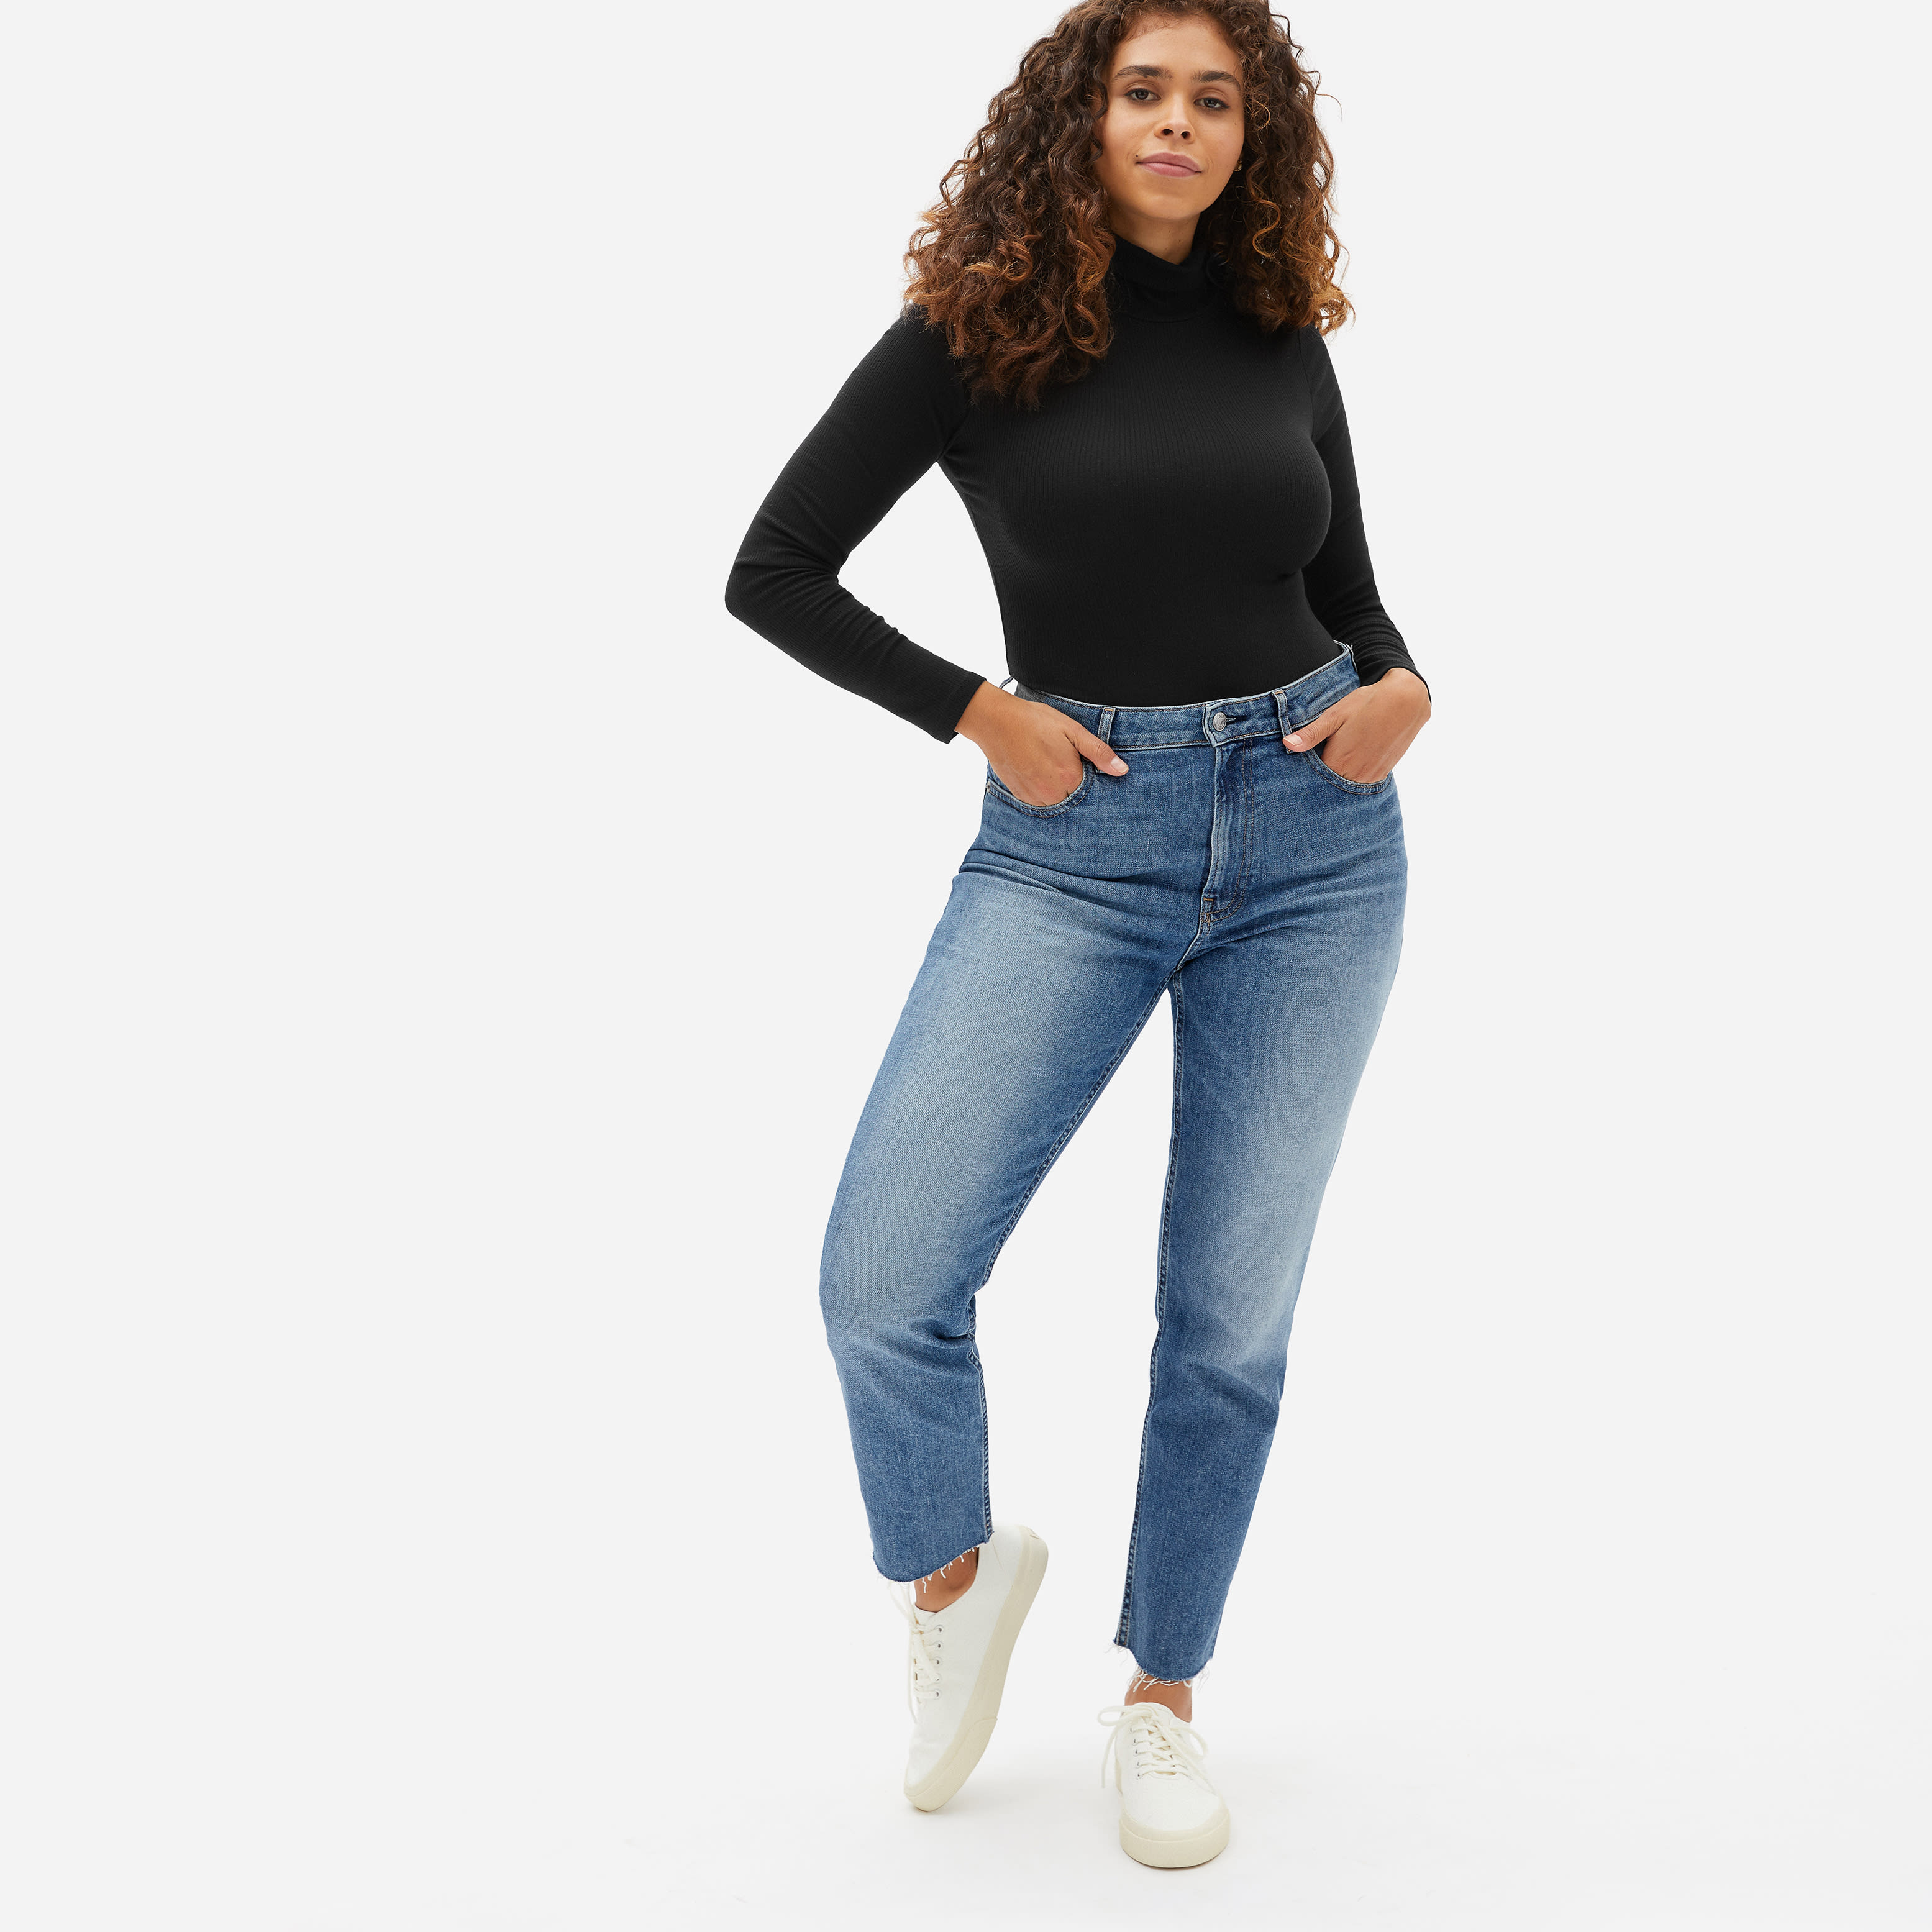 everlane plus size jeans